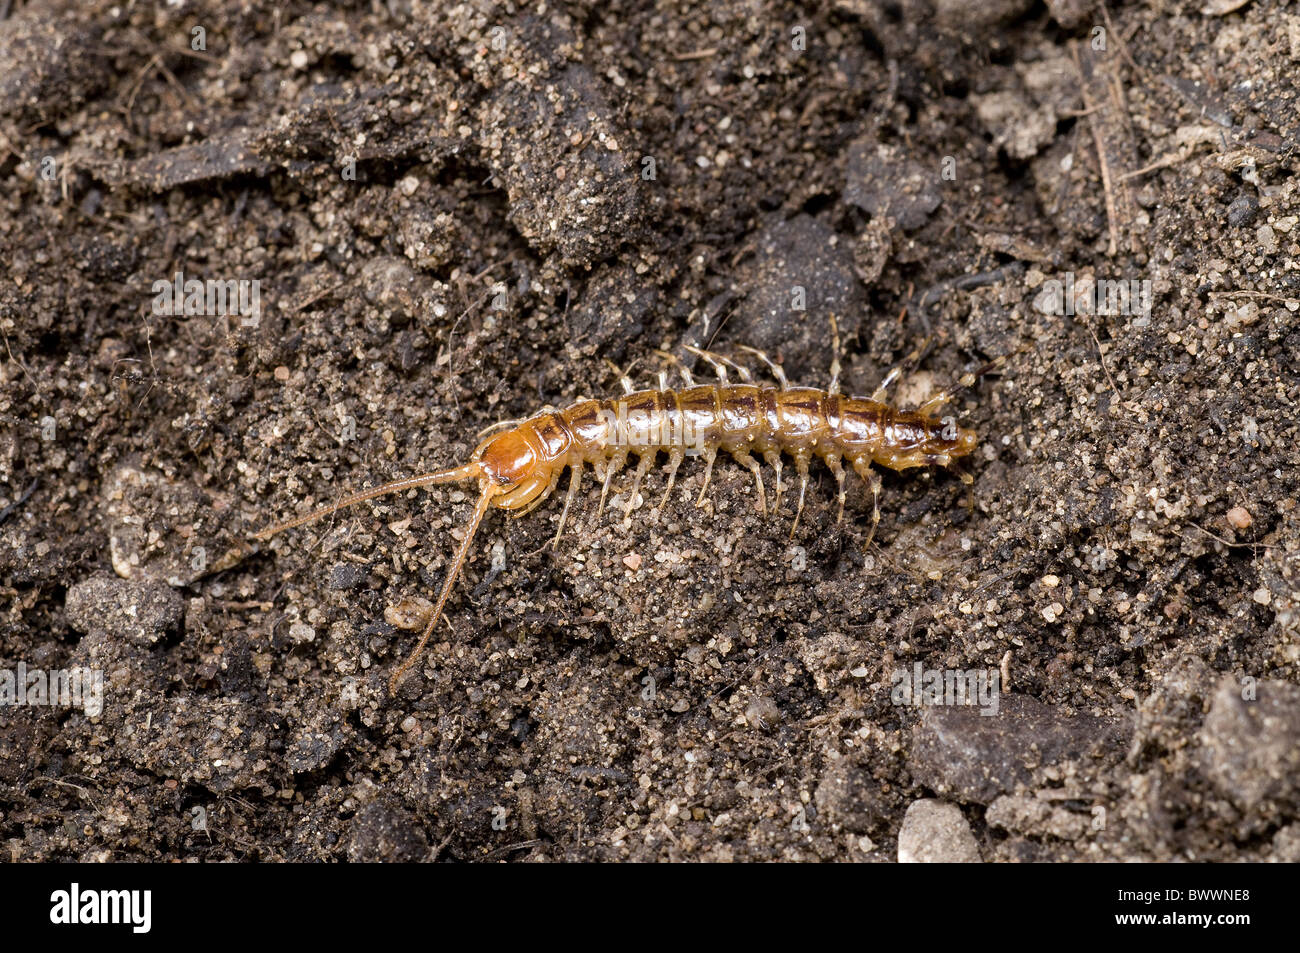 invertebrate invertebrates animal animals arthropod arthropods centipede centipedes europe european wildlife nature lithobiid Stock Photo